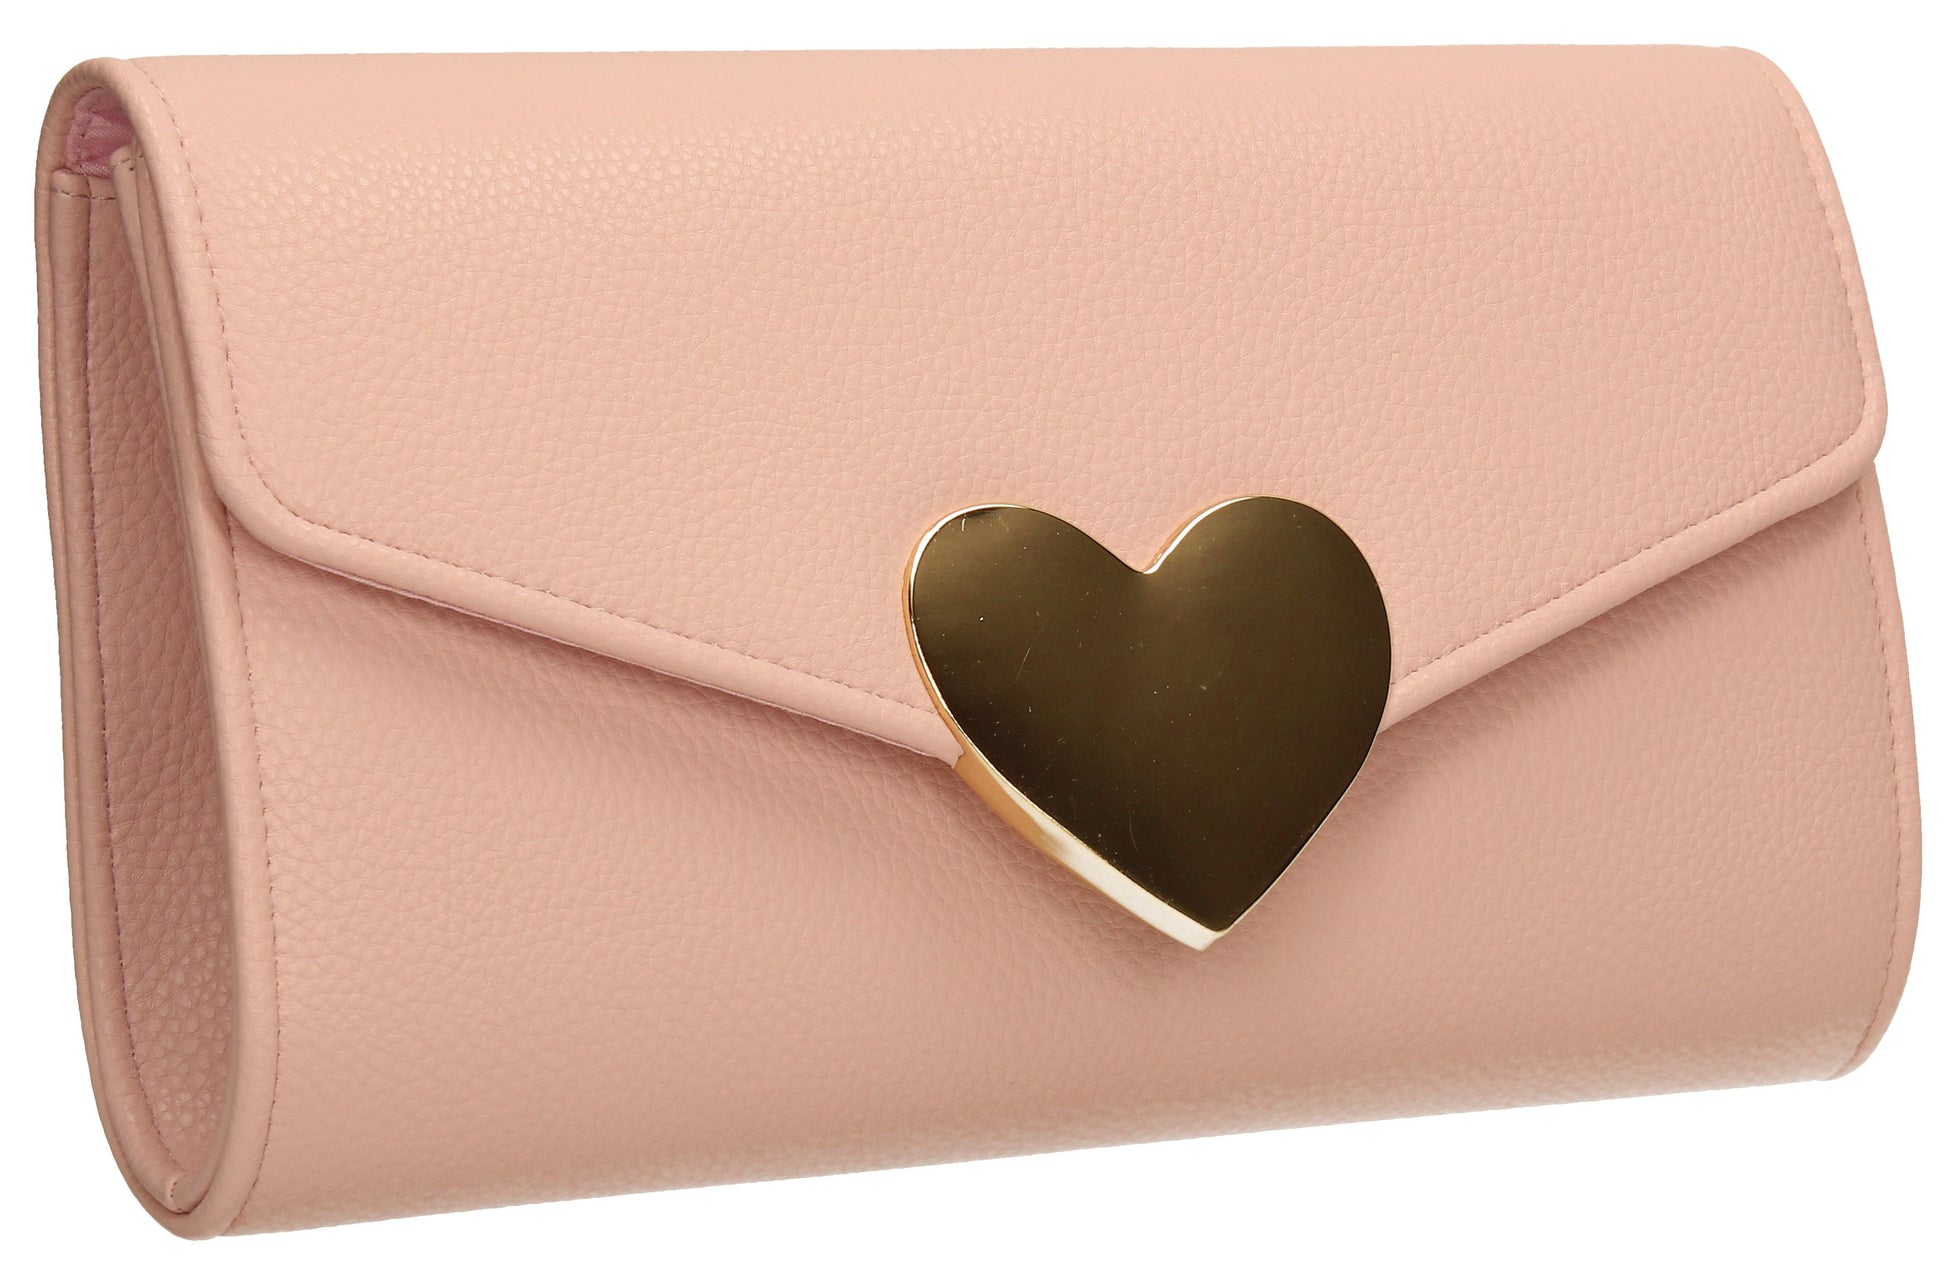 SWANKYSWANS Corrie Heart Clutch Bag Pink Cute Cheap Clutch Bag For Weddings School and Work